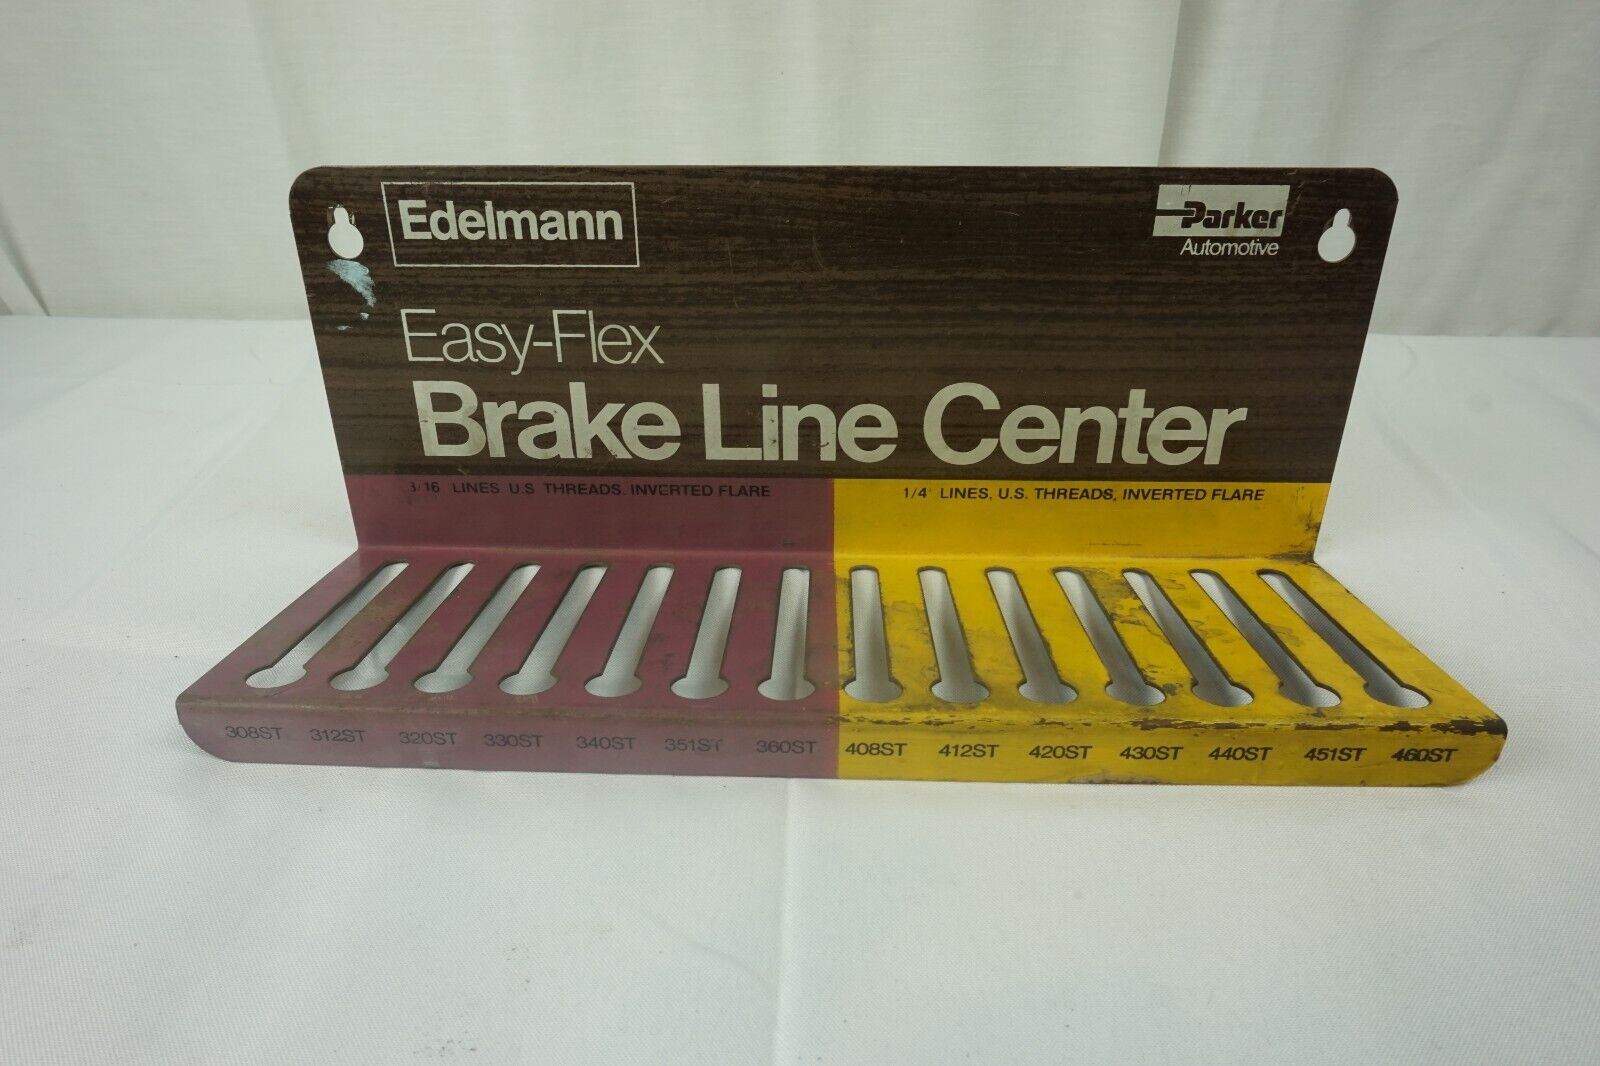 Edelmann Easy-Flex Brake Line Center Metal Sign/Display